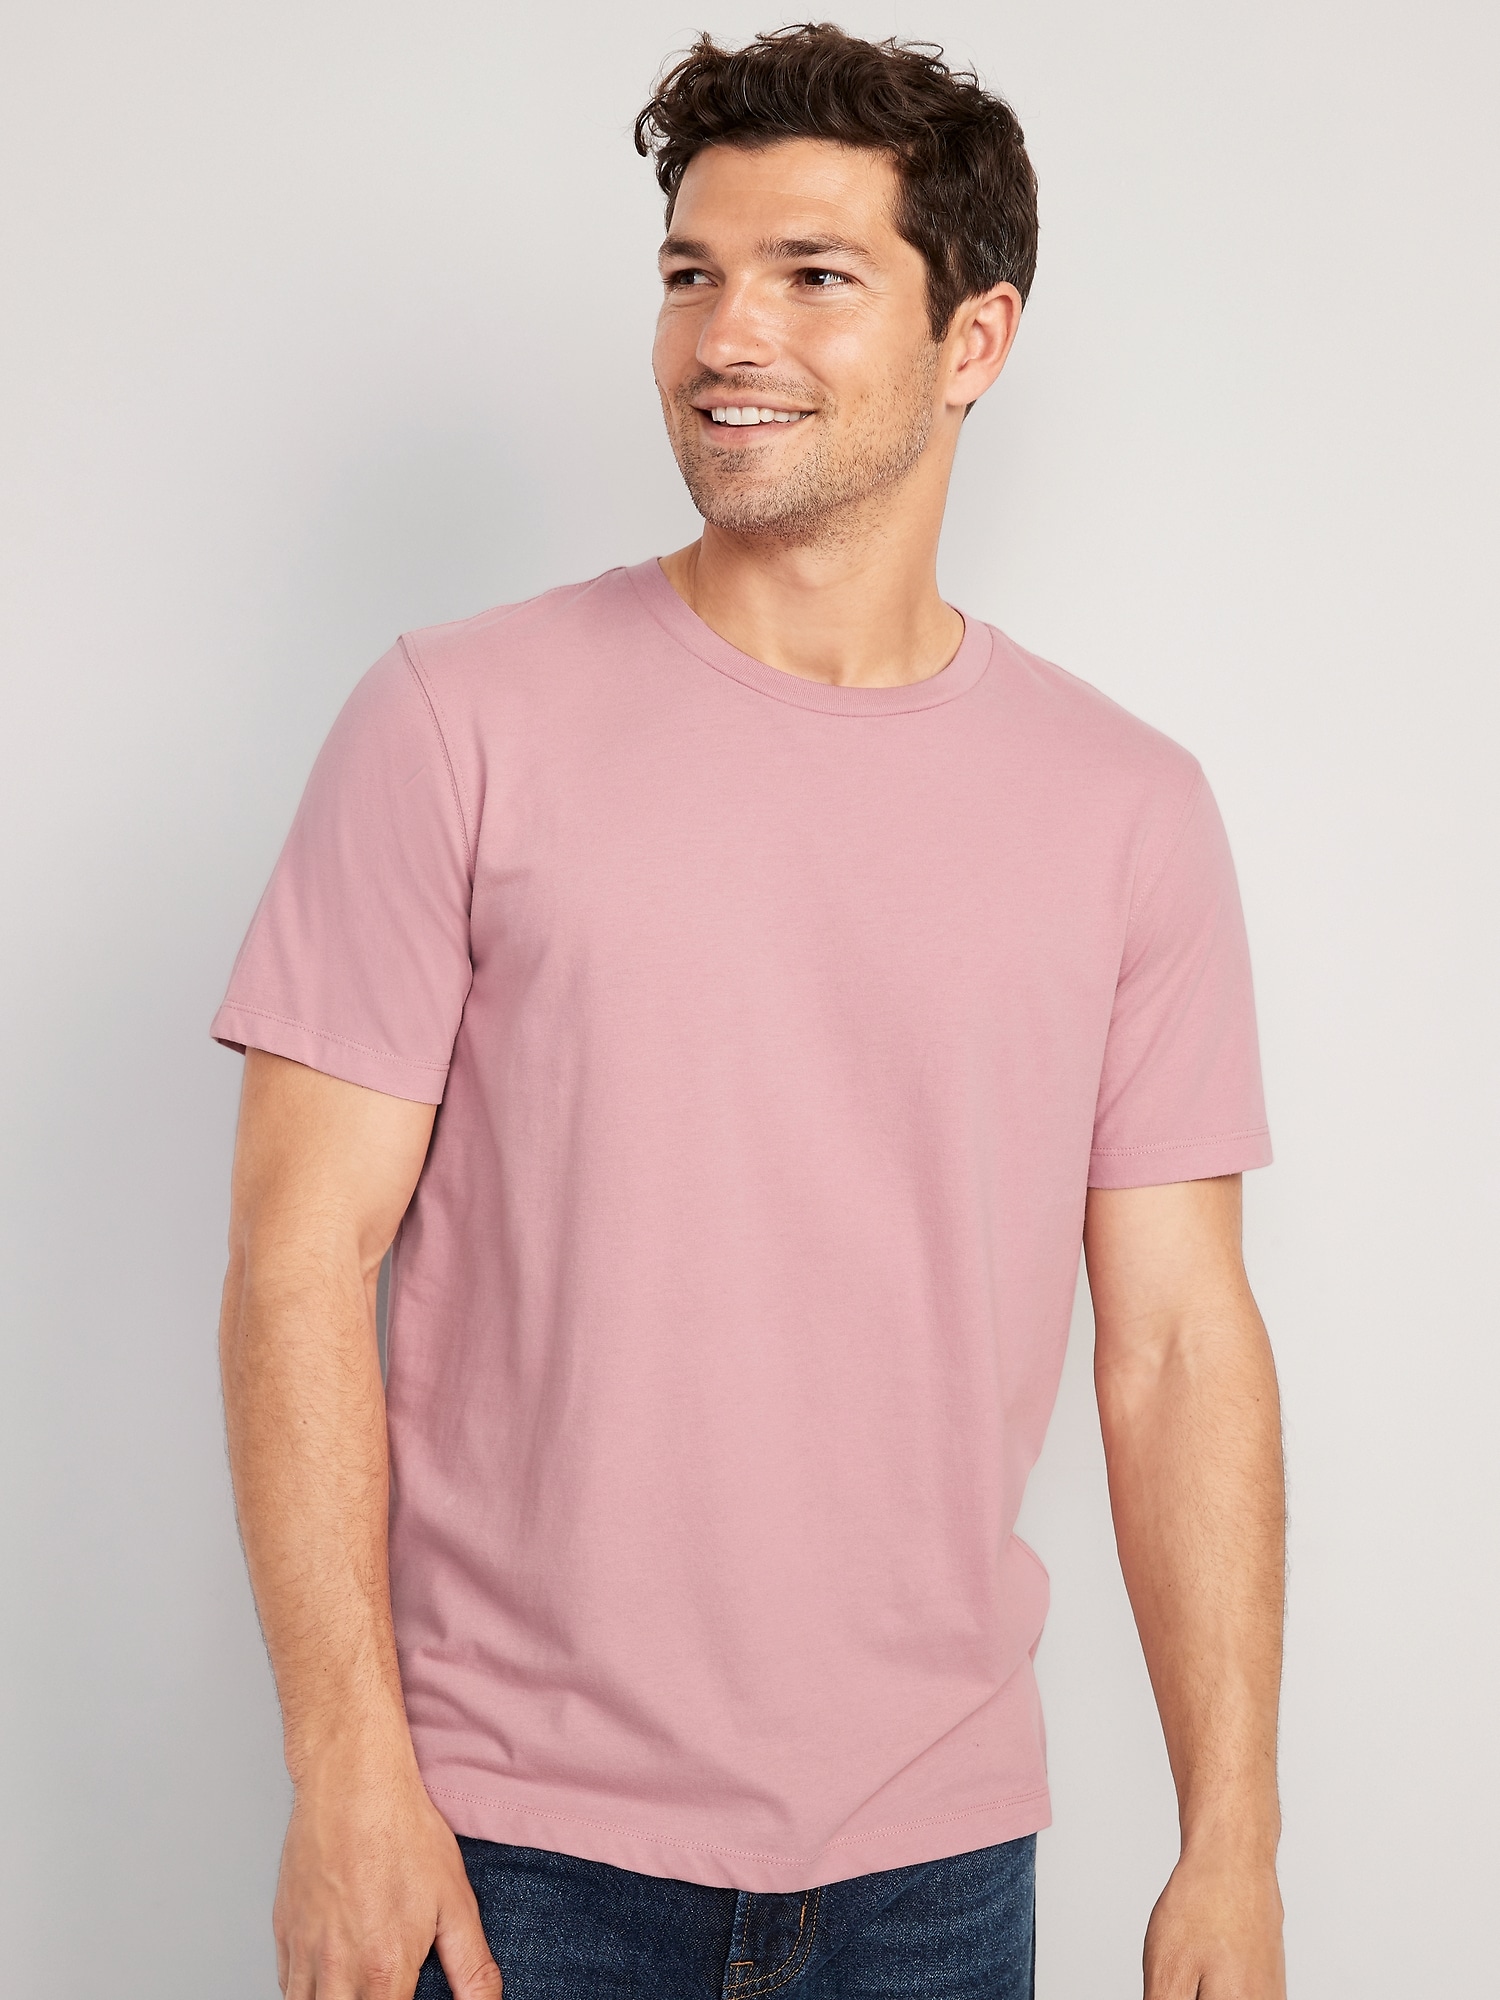 Old Navy Crew-Neck T-Shirt for Men pink. 1